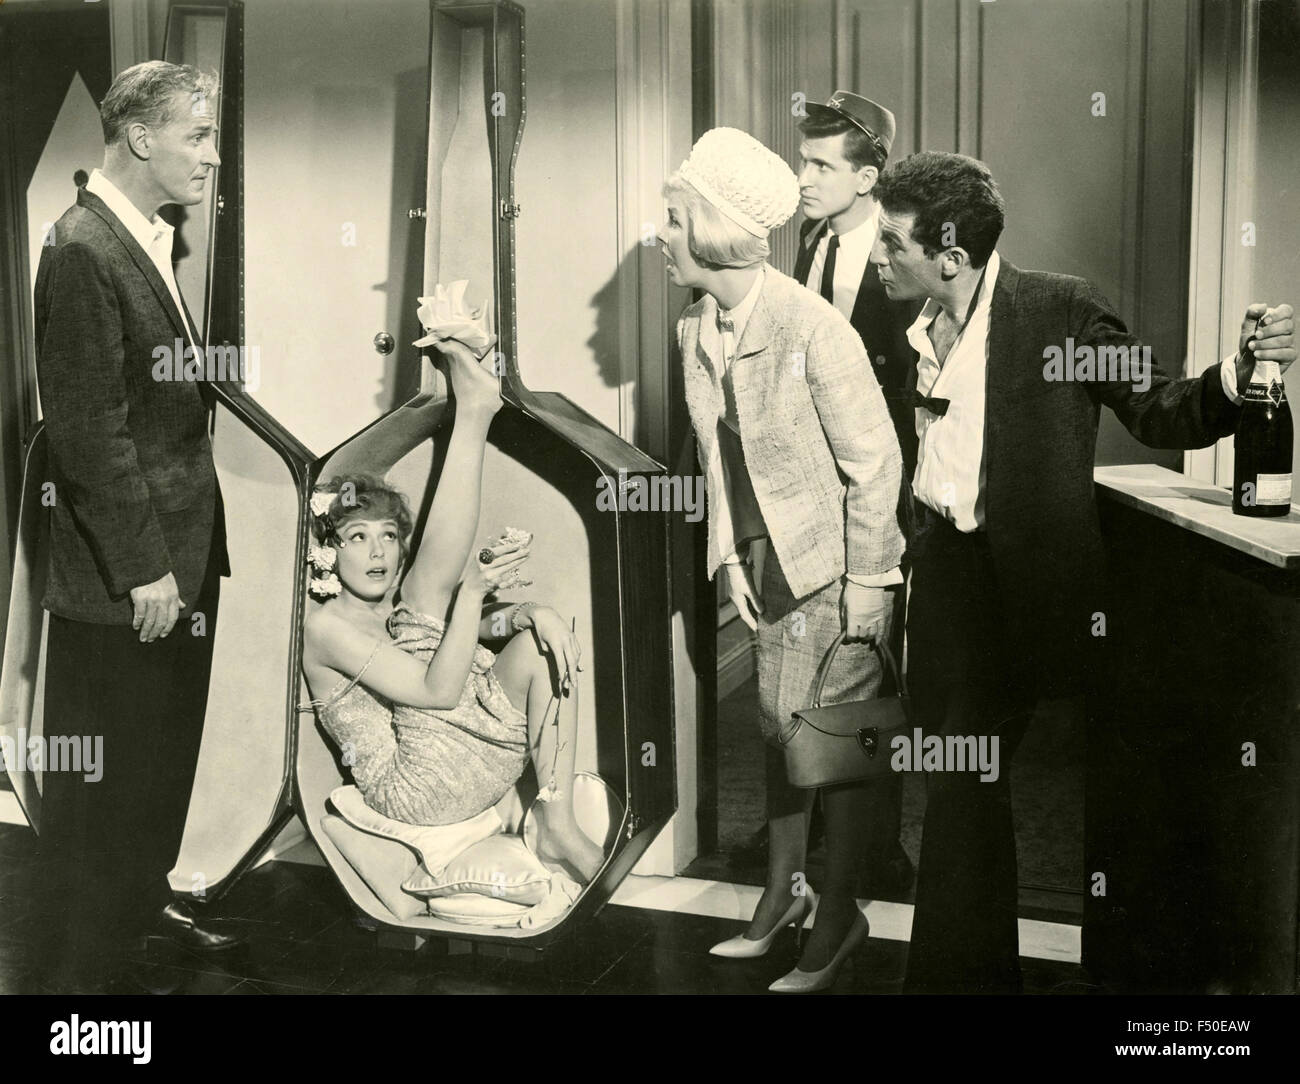 Schauspielerin Doris Day in dem Film "Lover come back" Stockfoto